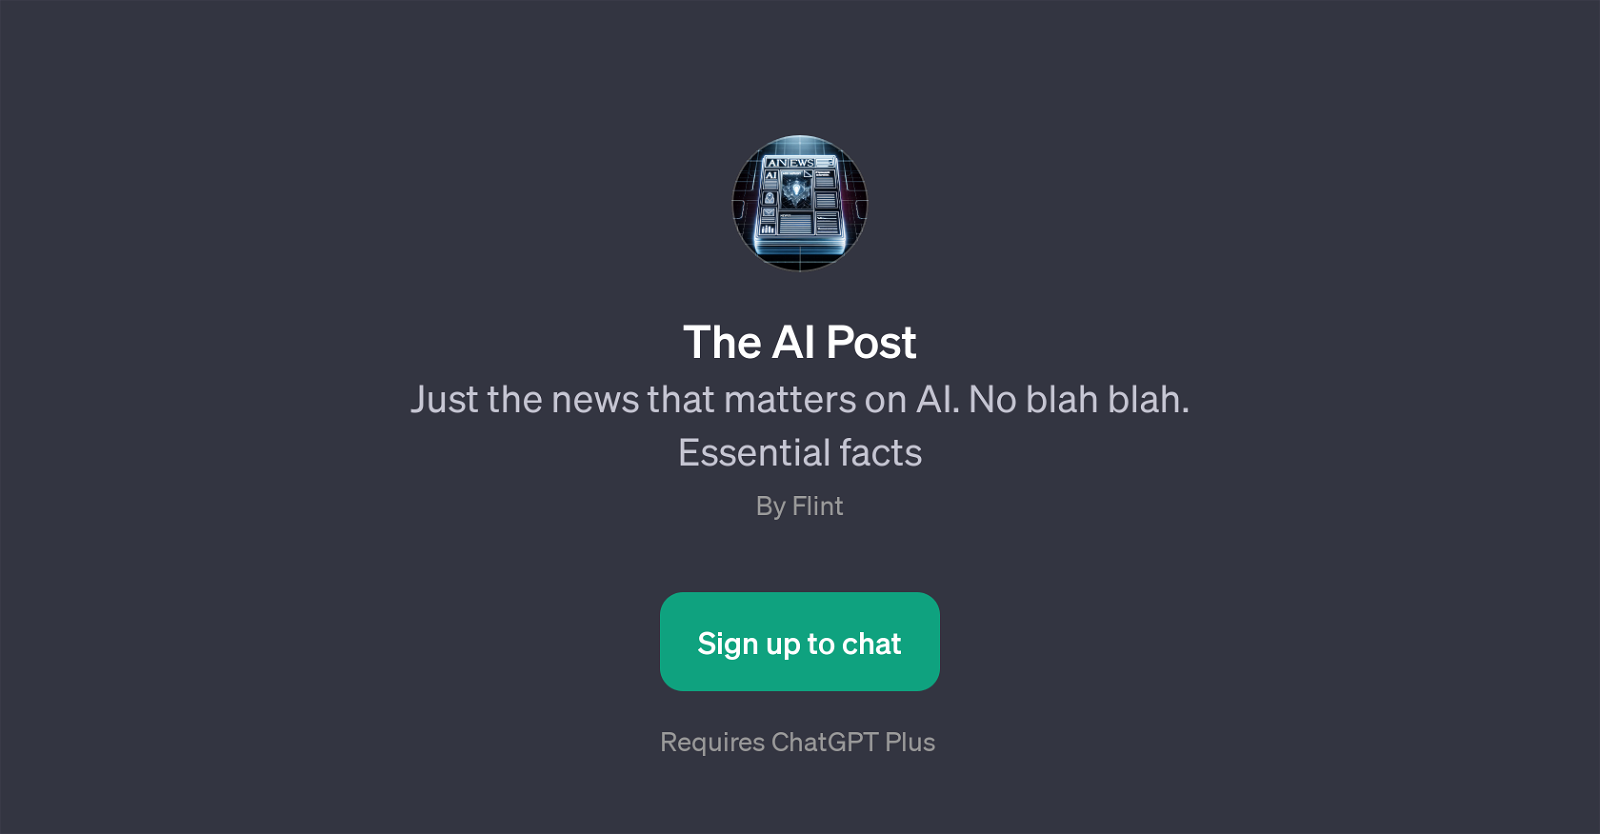 The AI Post website